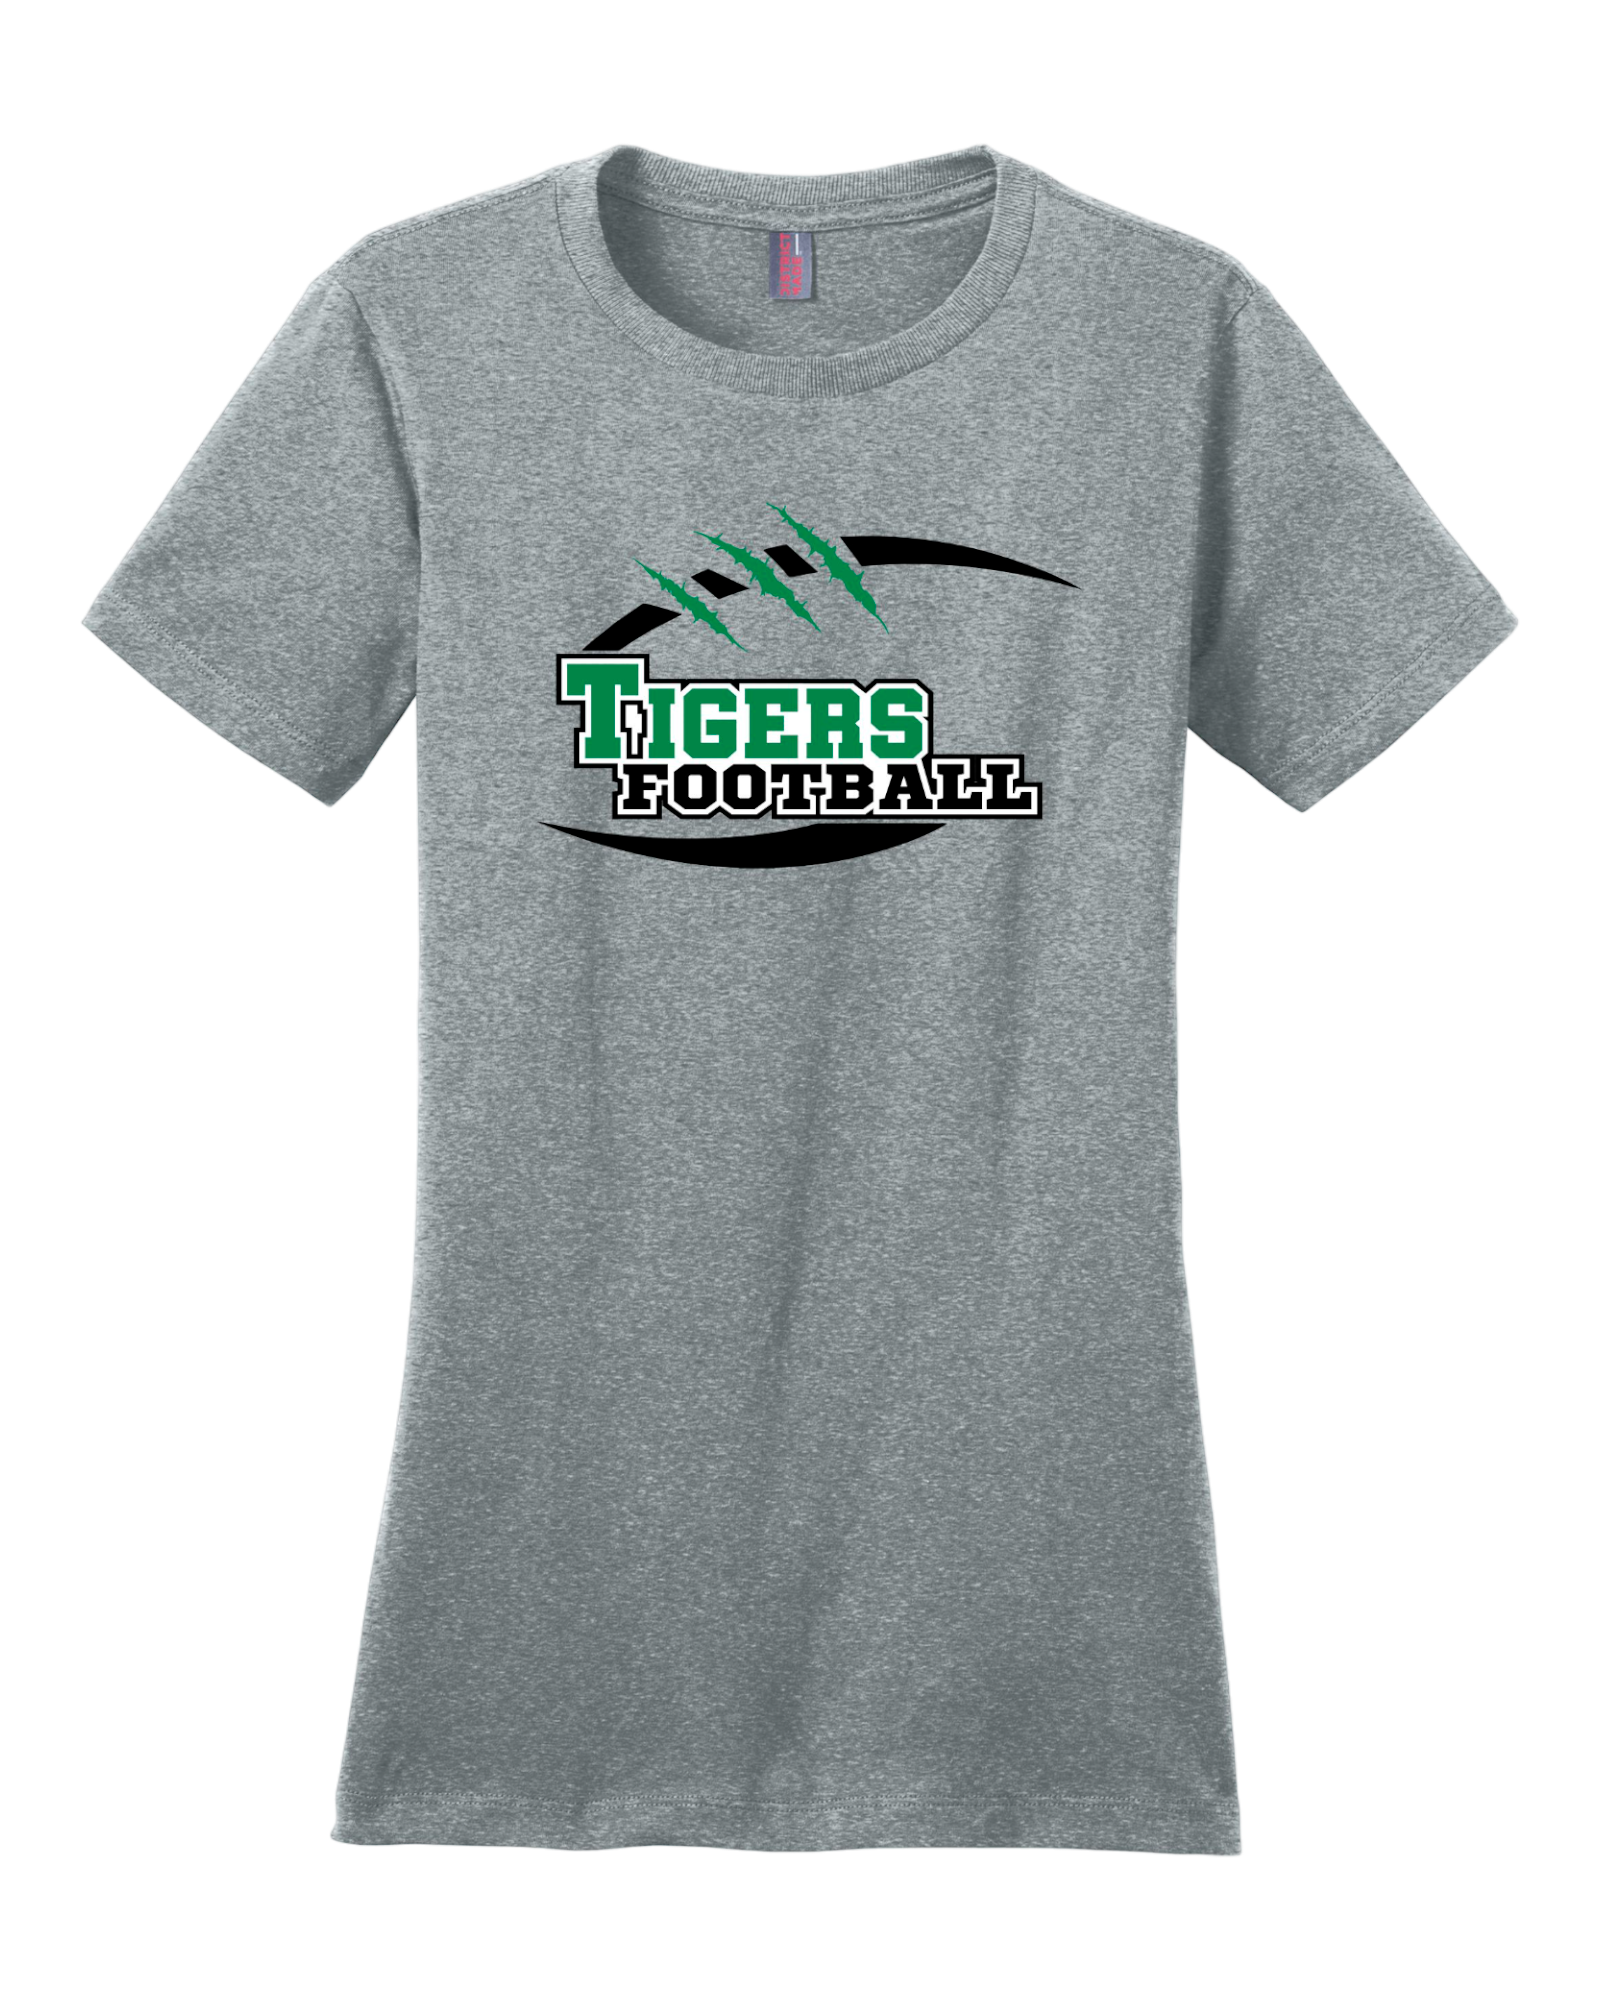 Tigers Football Shirt